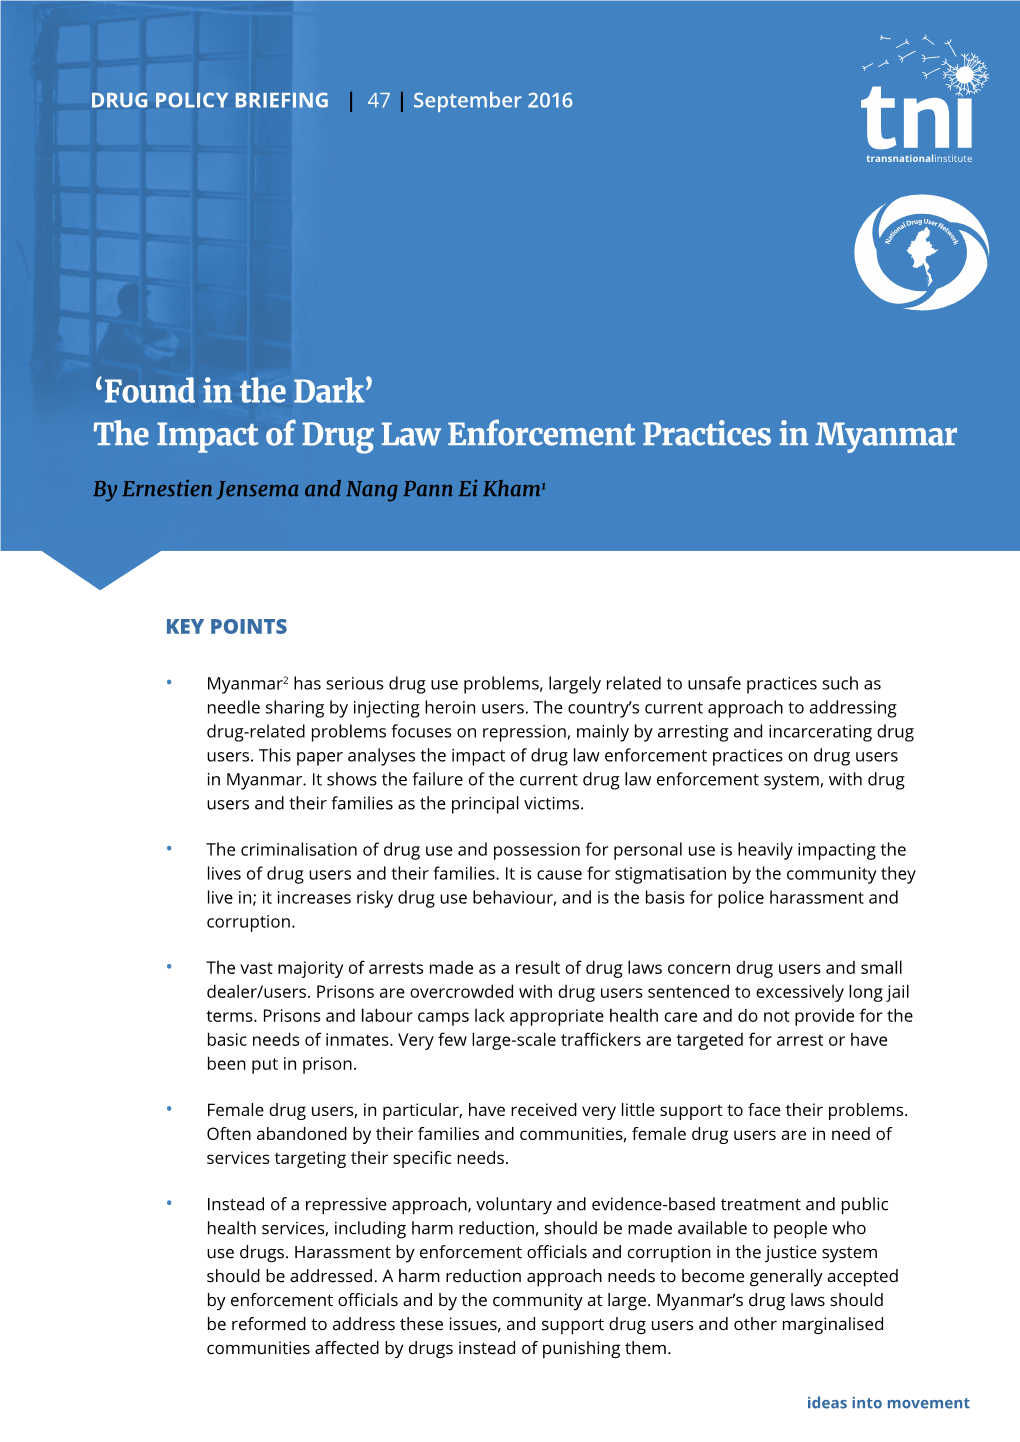 The Impact of Drug Law Enforcement Practices in Myanmar